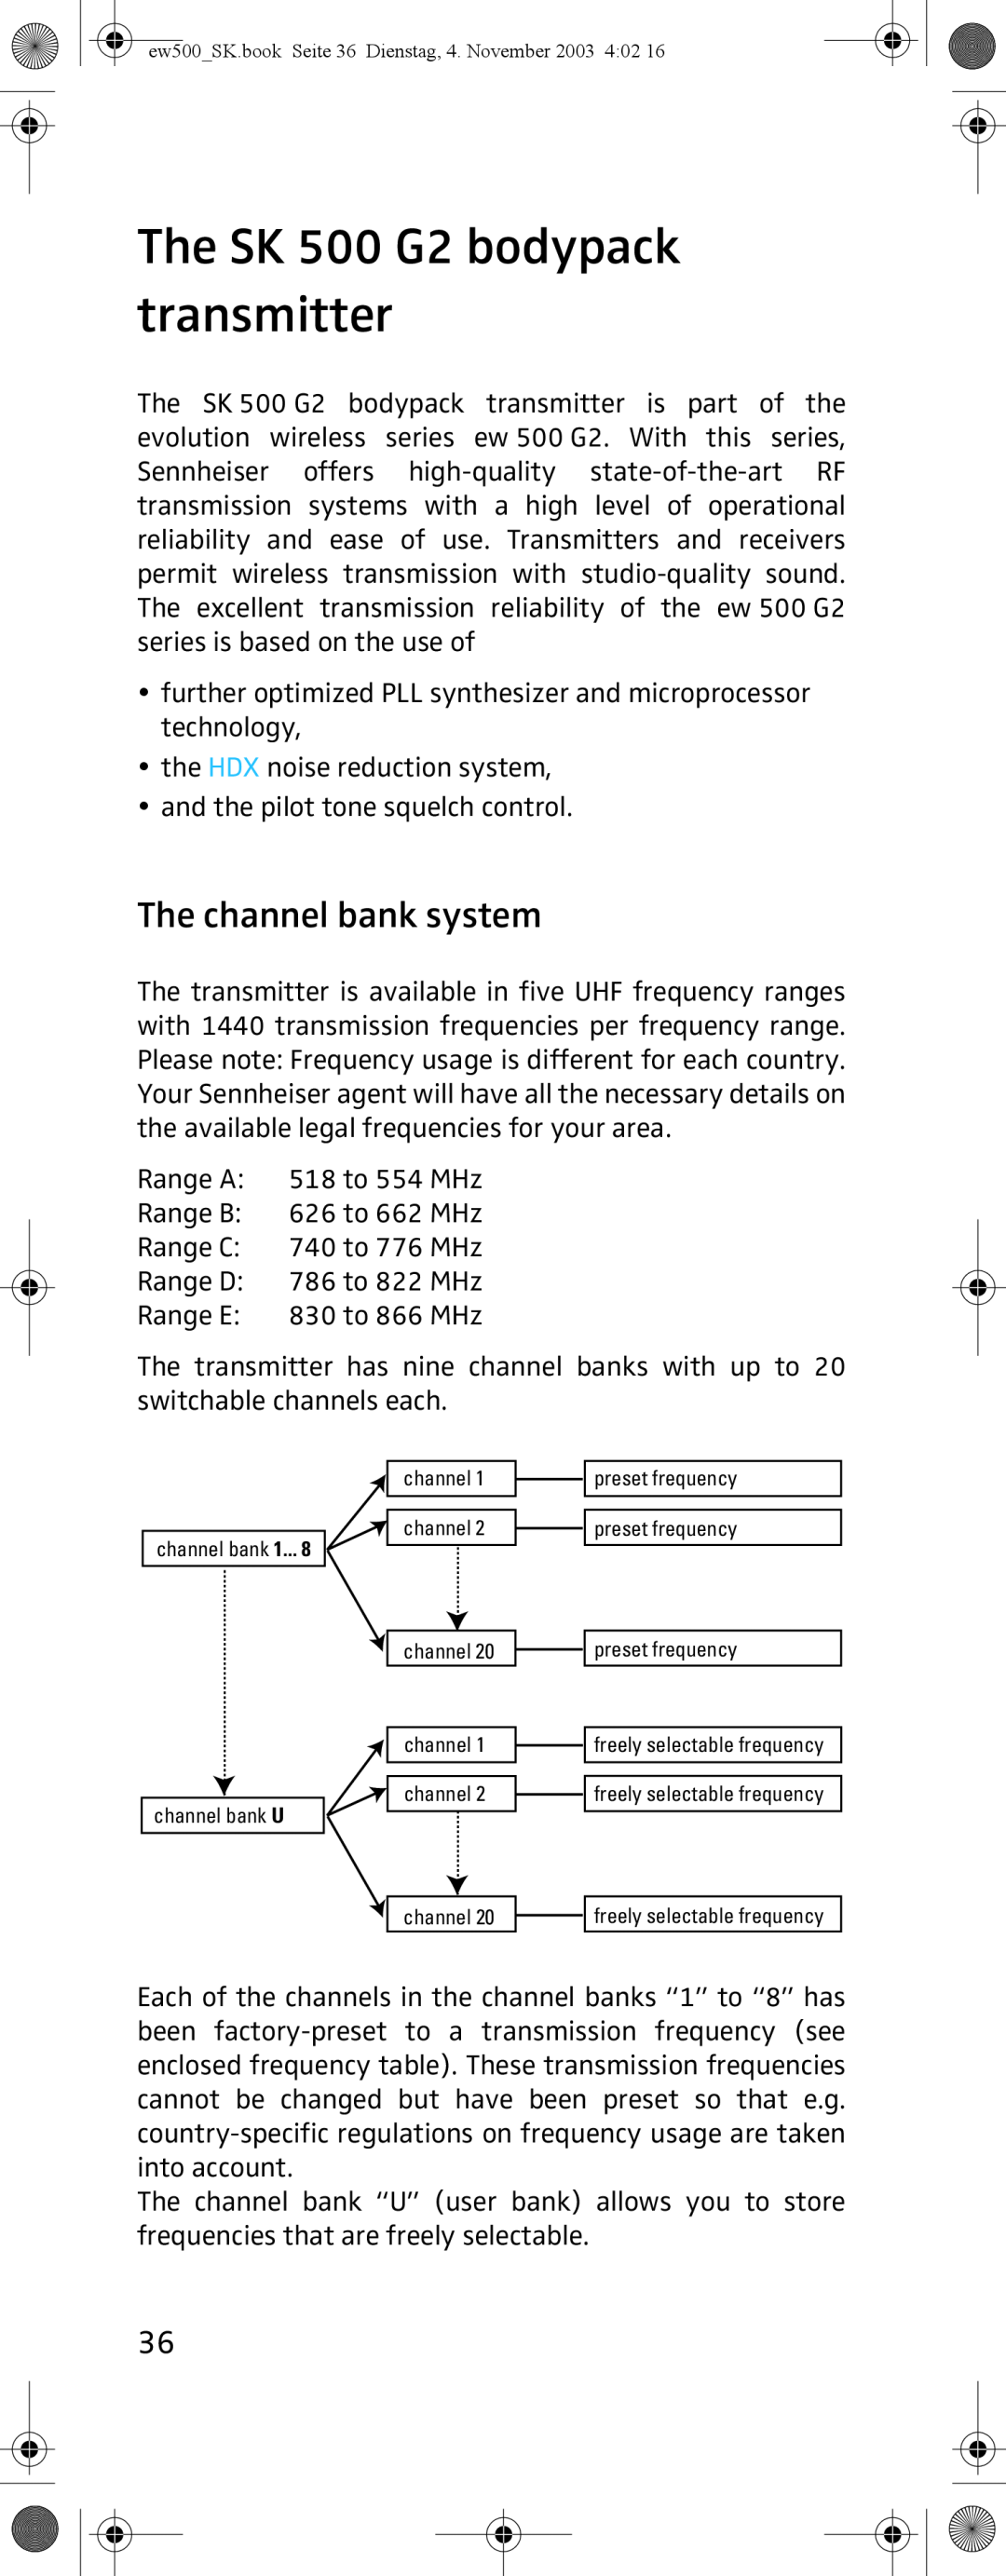 Sennheiser manual The SK 500 G2 bodypack transmitter, The channel bank system 